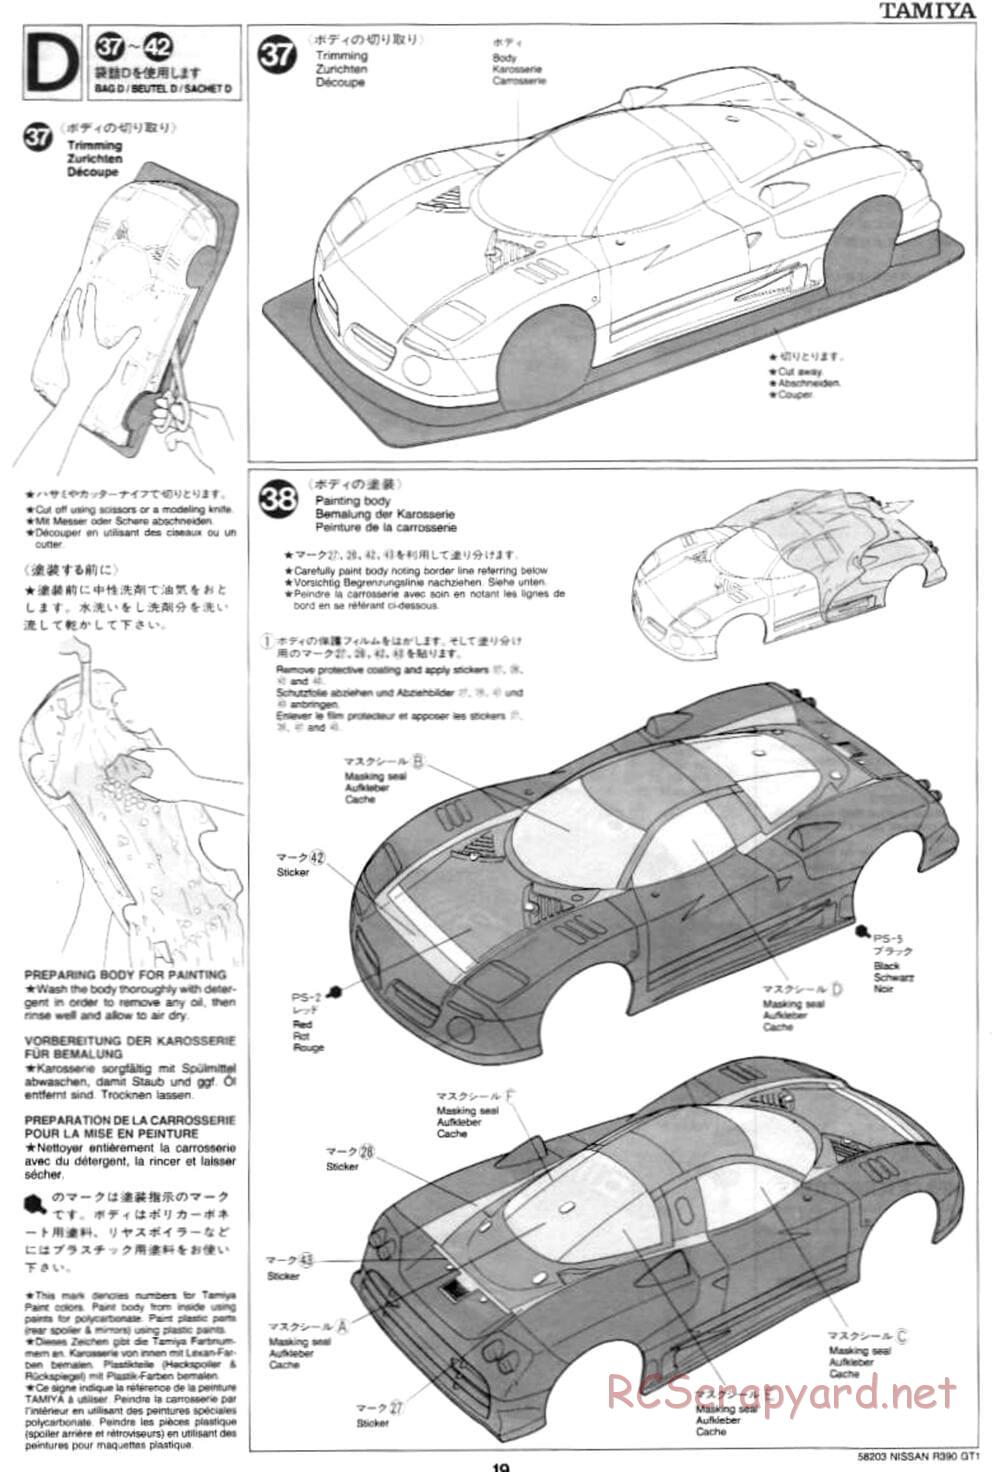 Tamiya - Nissan R390 GT1 - TA-03R Chassis - Manual - Page 19